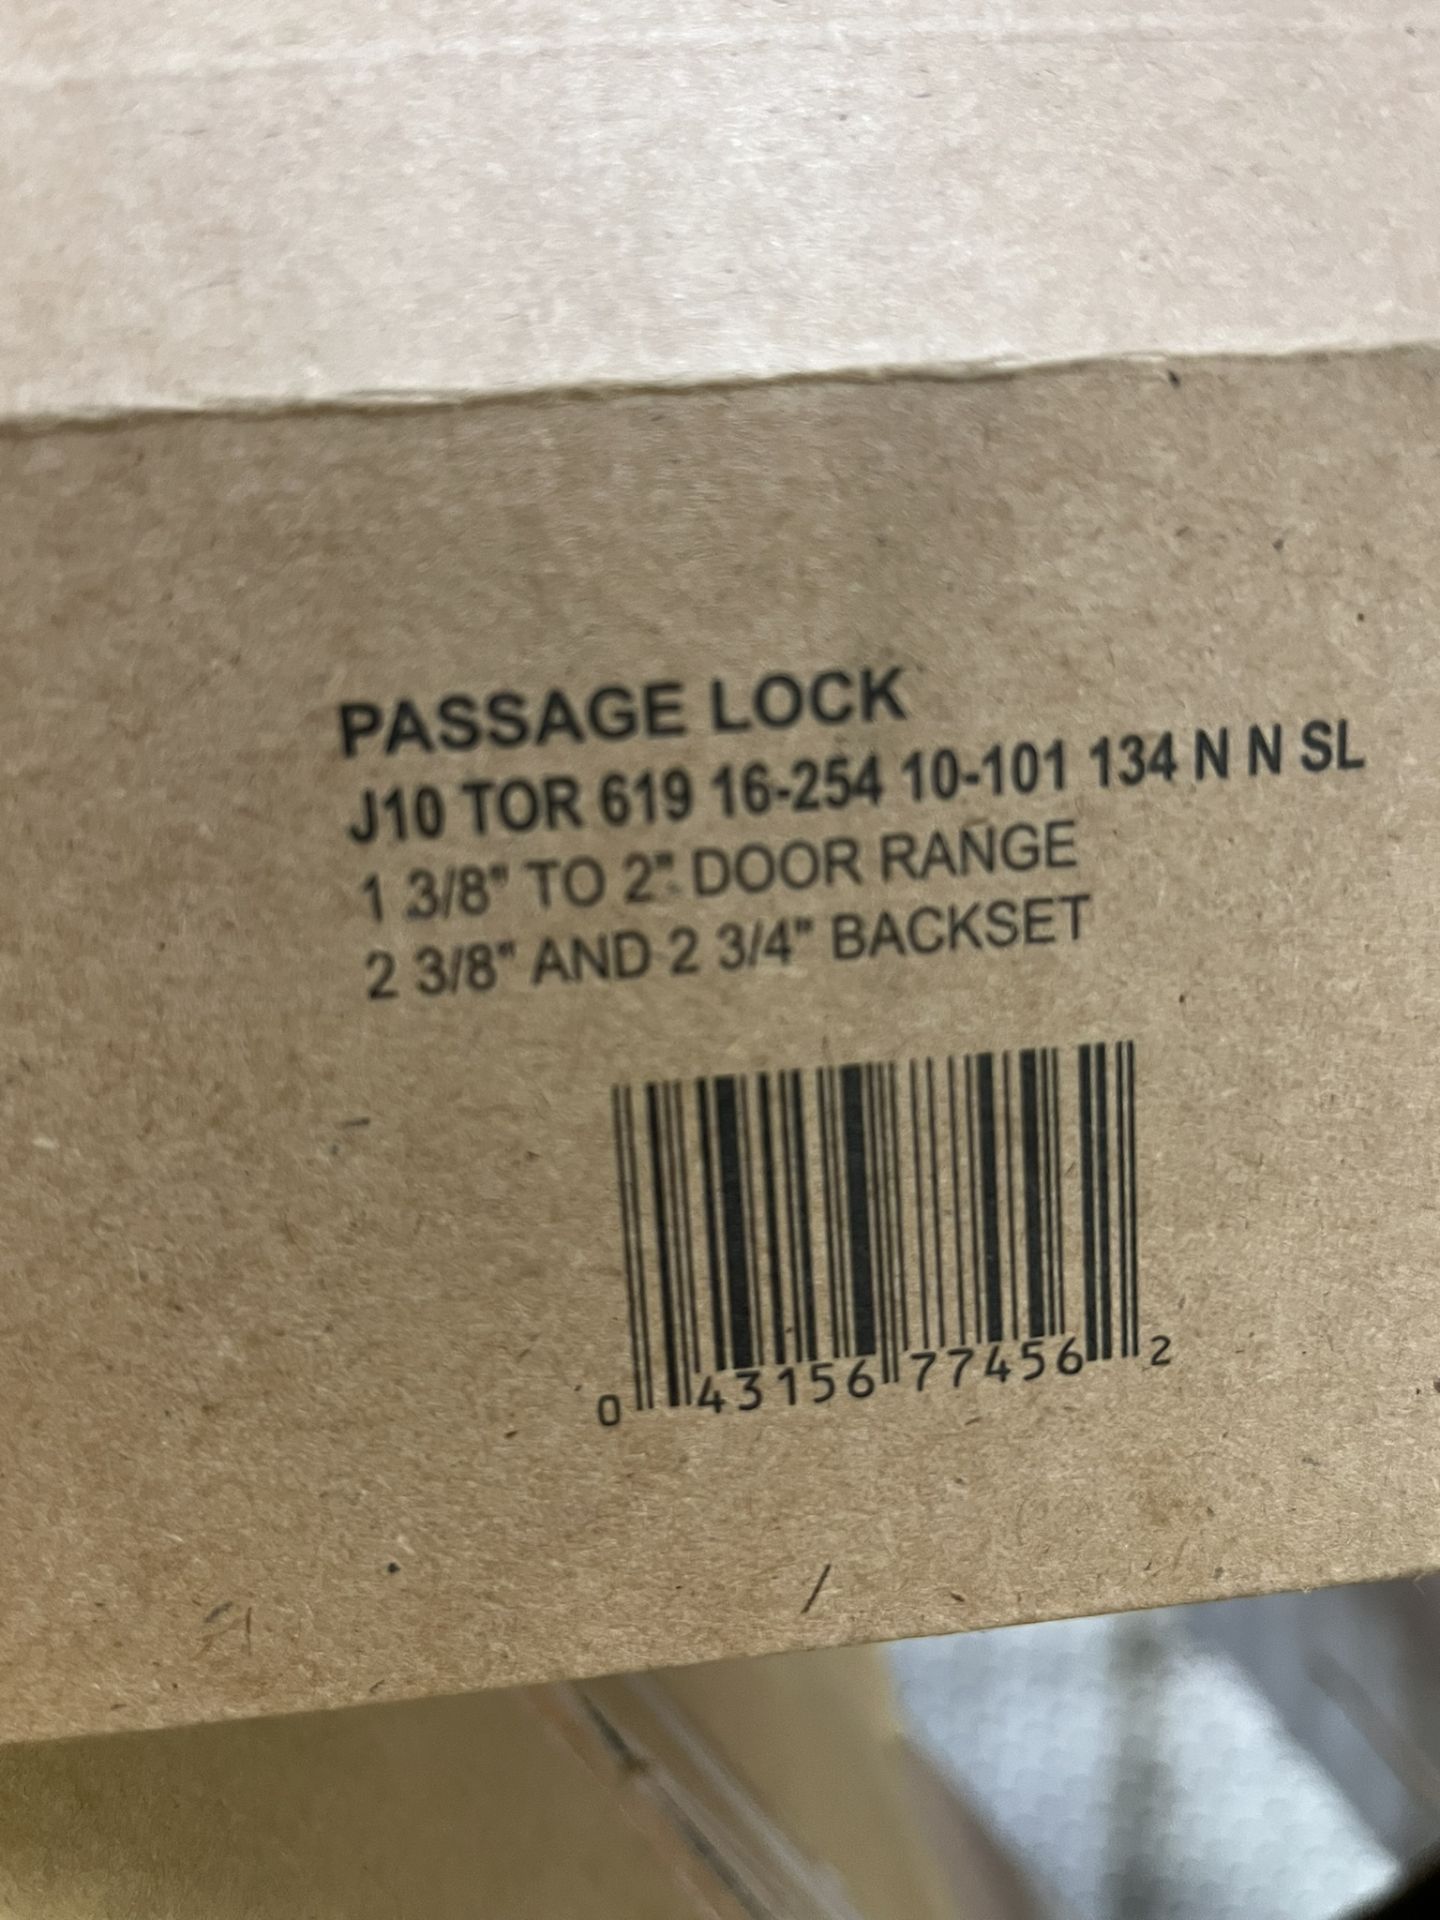 (24) SCHLAGE PASSAGE LOCKS 1 3/8" TO 2" DOOR RANGE; 2 3/8" AND 2 3/4" BACKSET - Image 3 of 3